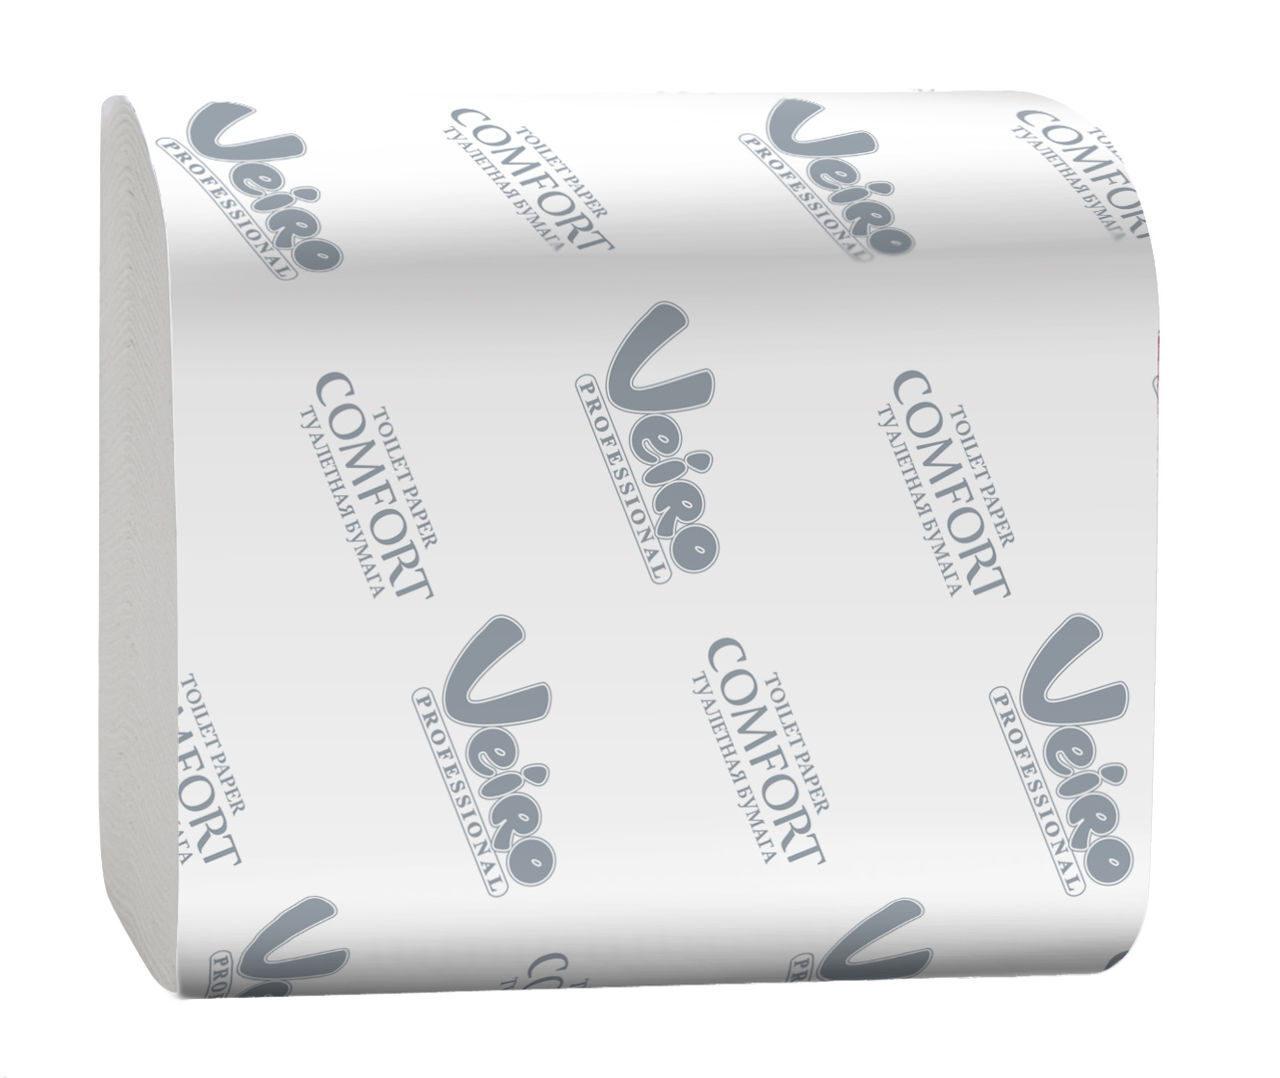 Veiro Professional Comfort TV201 Туалетная бумага V-сложение